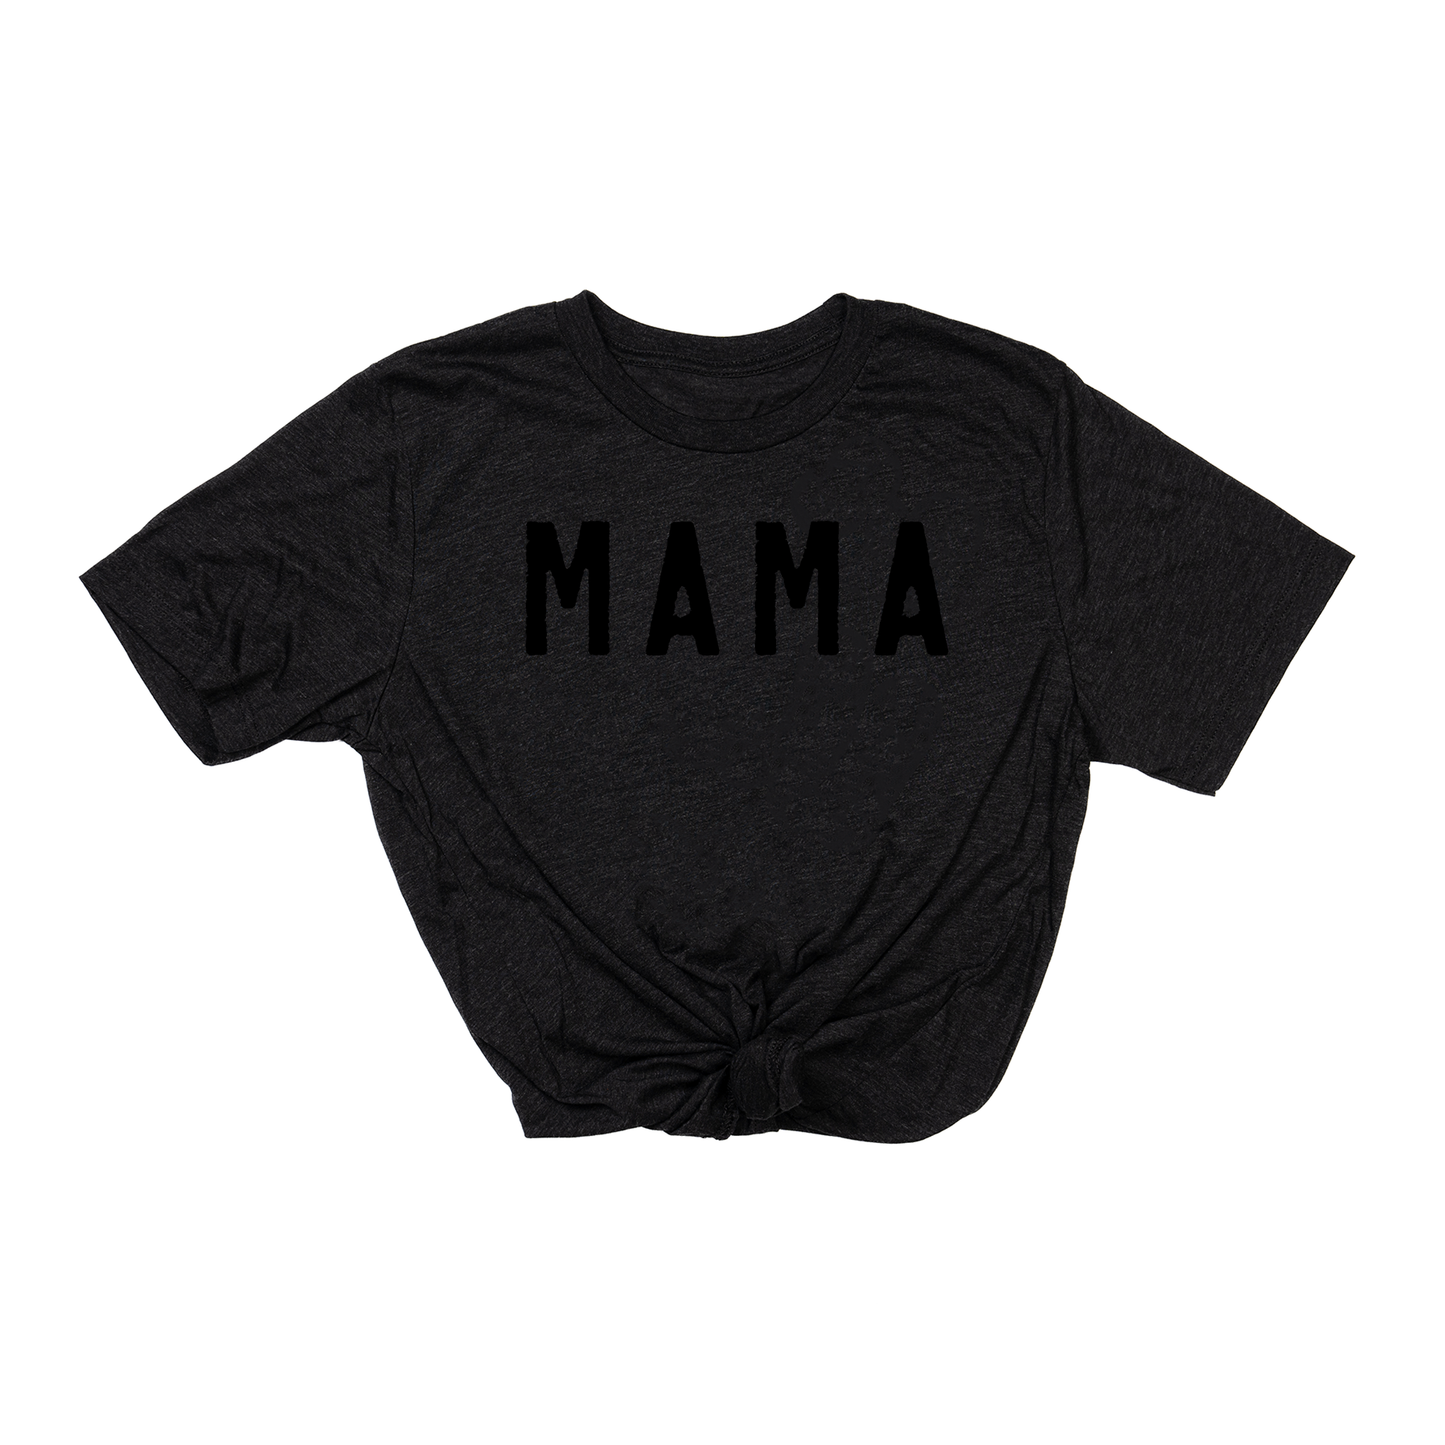 Mama (Rough,  Black) - Tee (Charcoal Black)